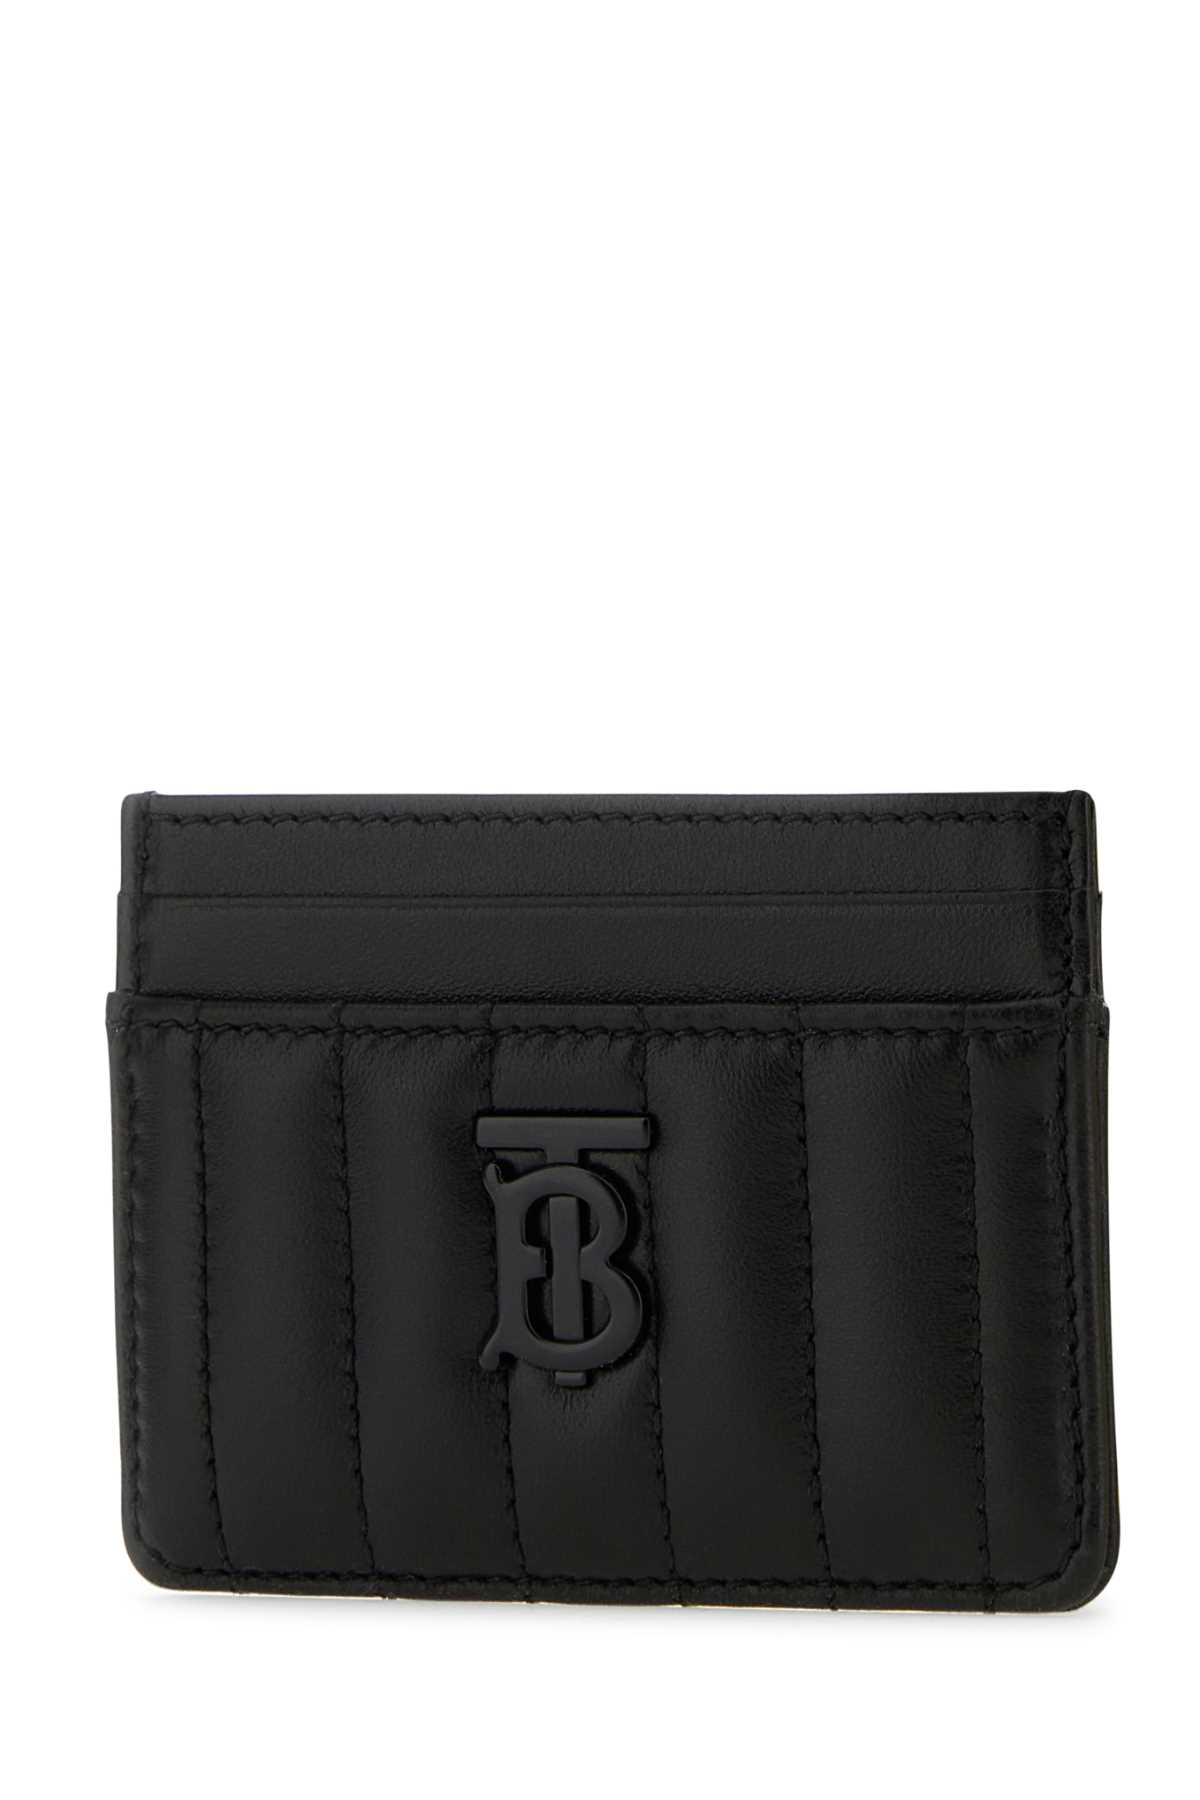 Burberry Black Leather Card Holder In Blackblack